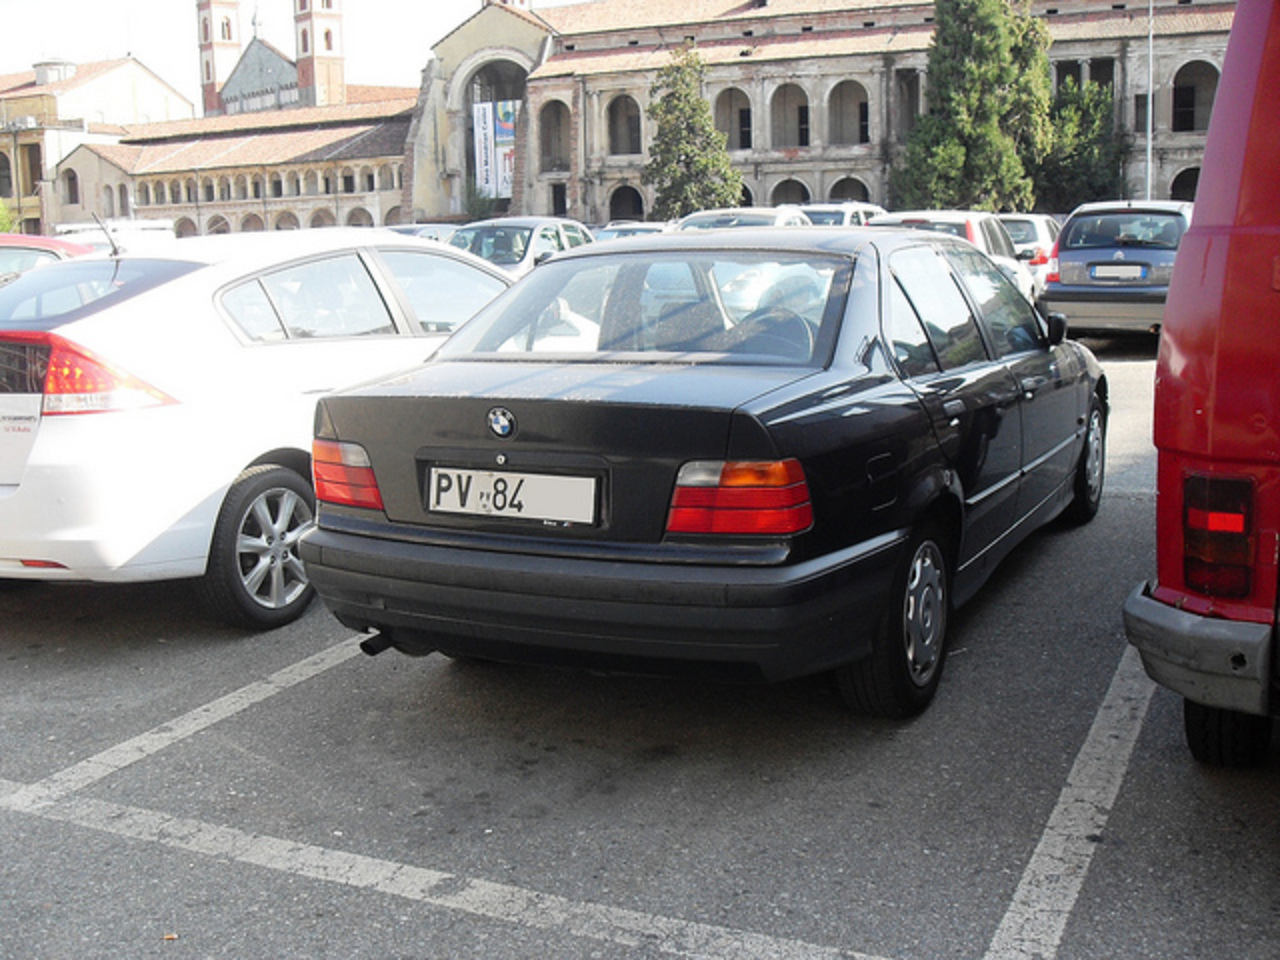 BMW 316i E36 1994 post. | Flickr - Photo Sharing!